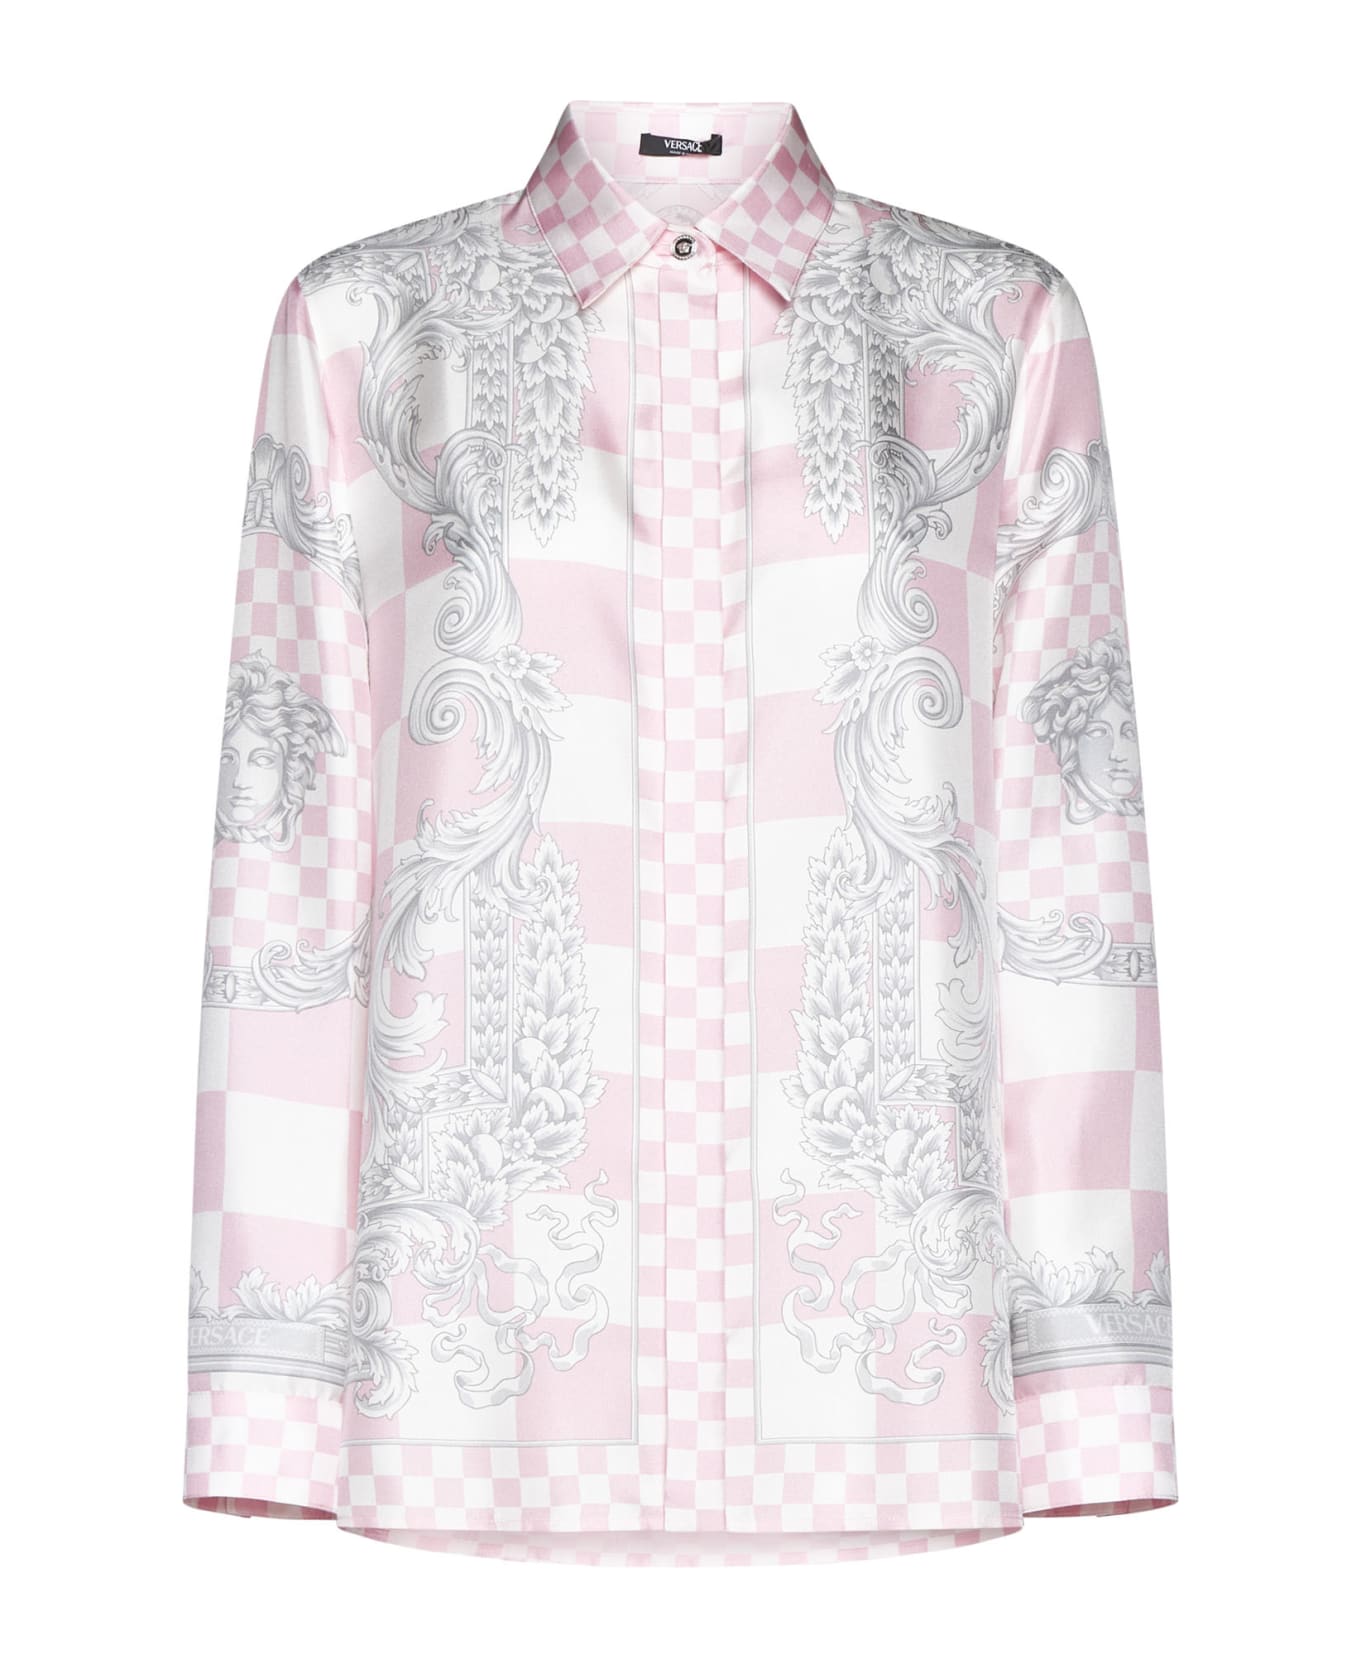 Versace Shirt - Pastel pink + white + silver